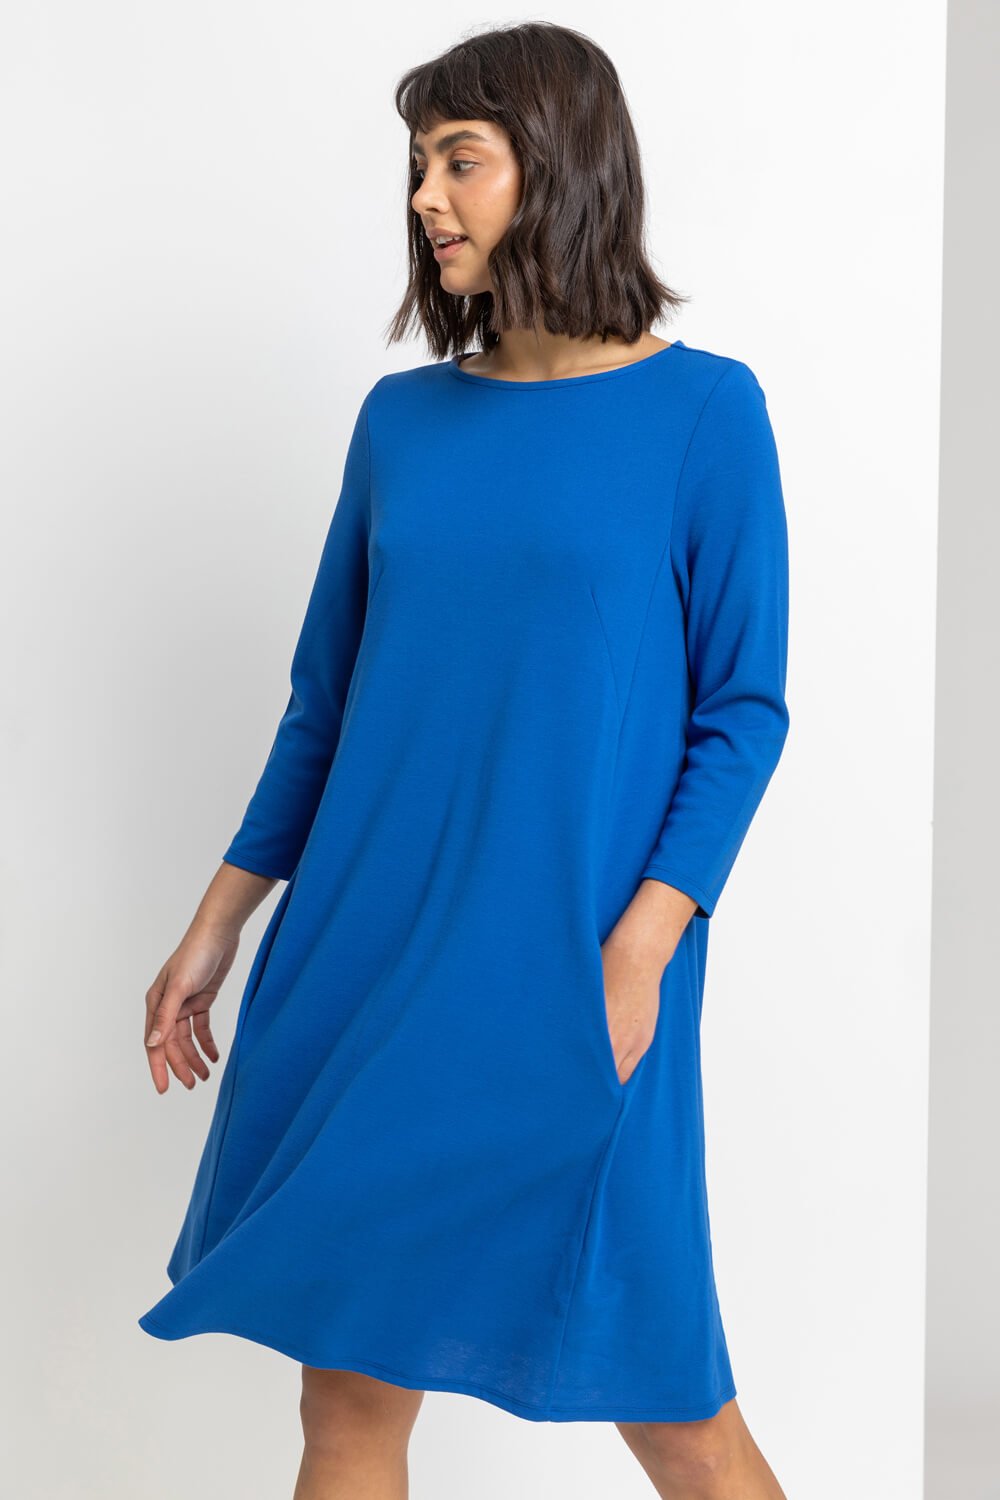 A-Line Pocket Detail Swing Dress in Royal Blue - Roman Originals UK